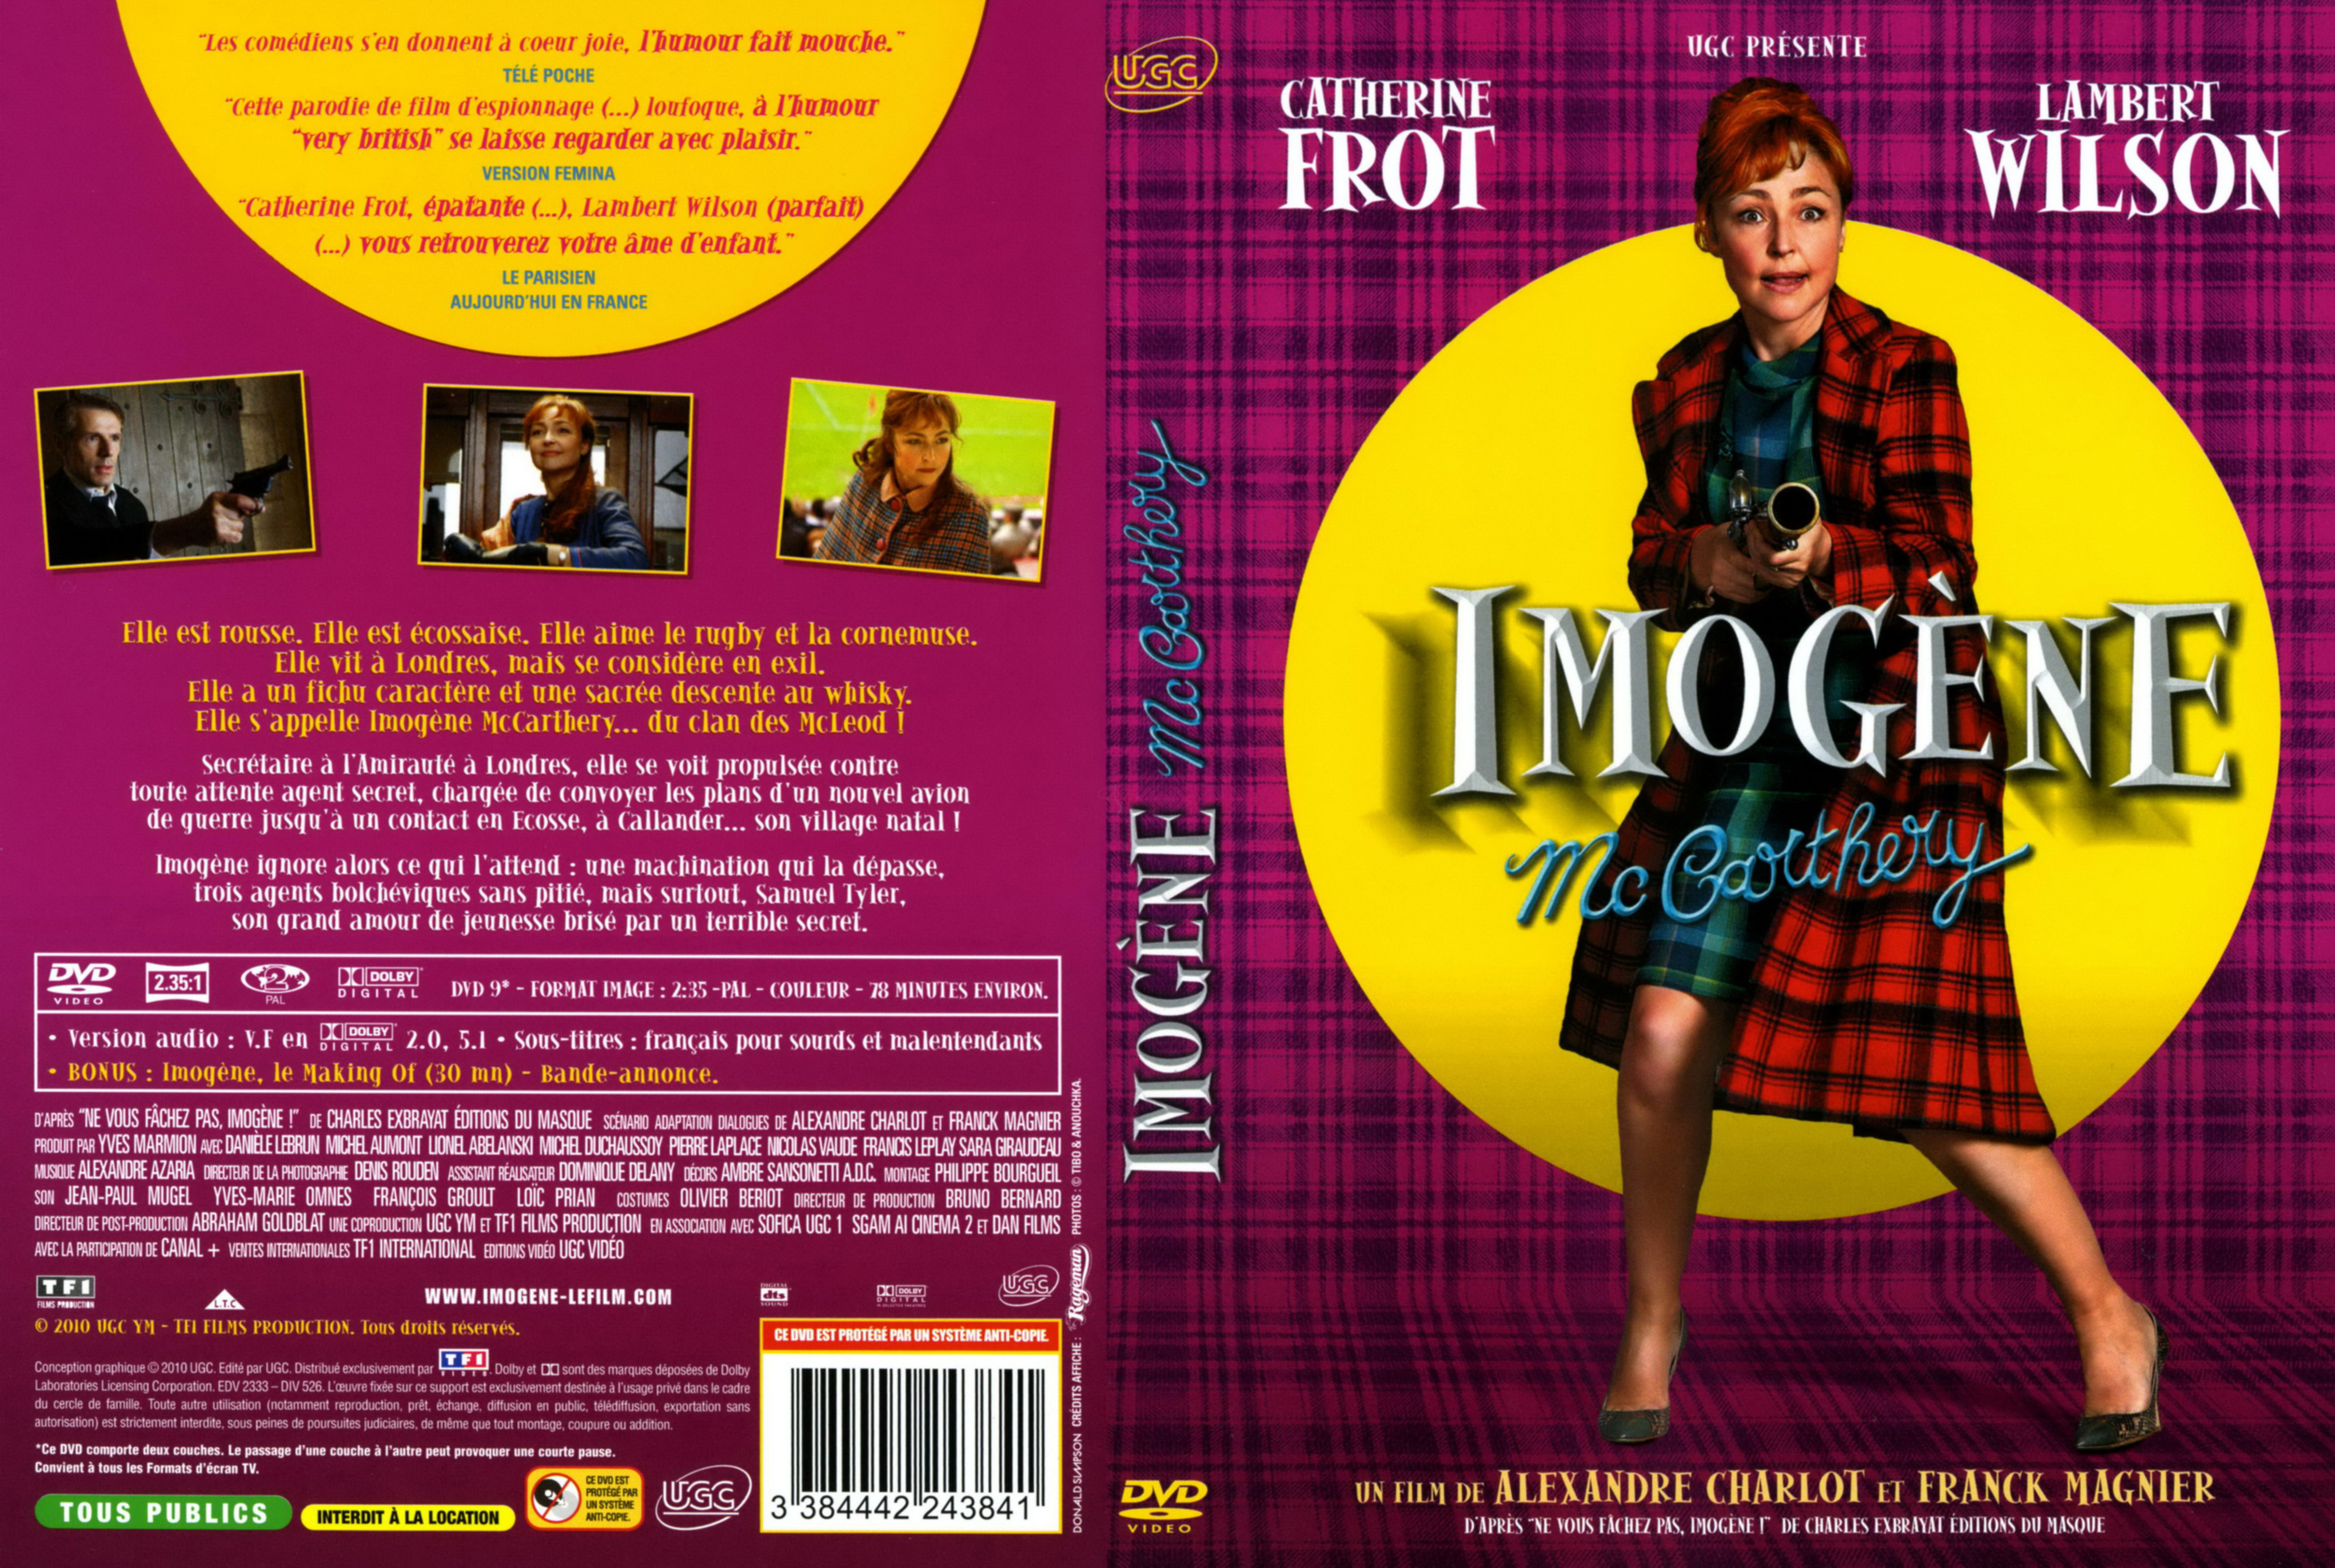 Jaquette DVD Imogene McCarthery